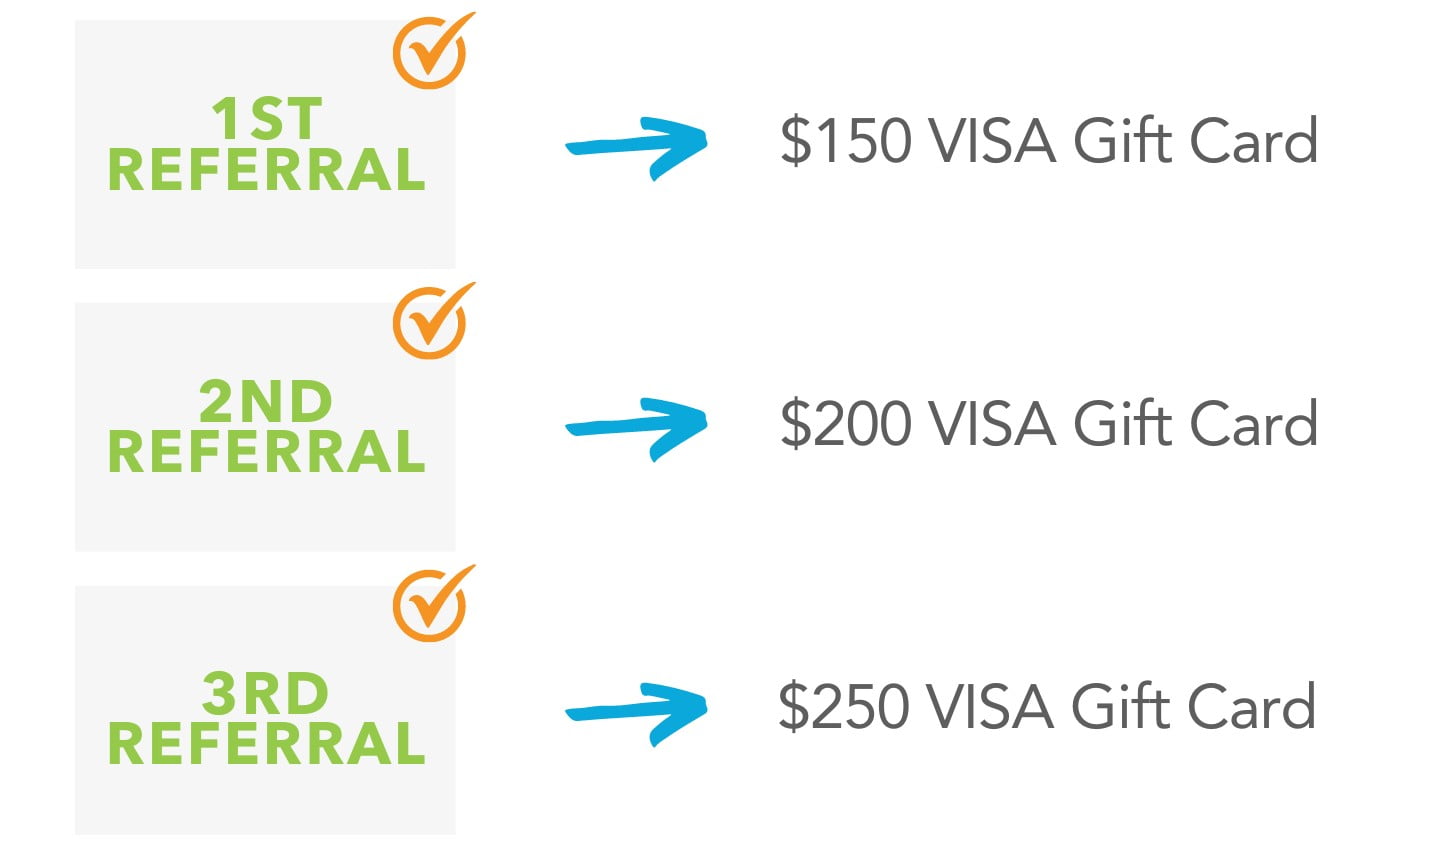 1st Referral: $150 VISA Gift Card - 2nd Referral: $200 VISA Gift Card - 3rd Referral: $250 VISA Gift Card